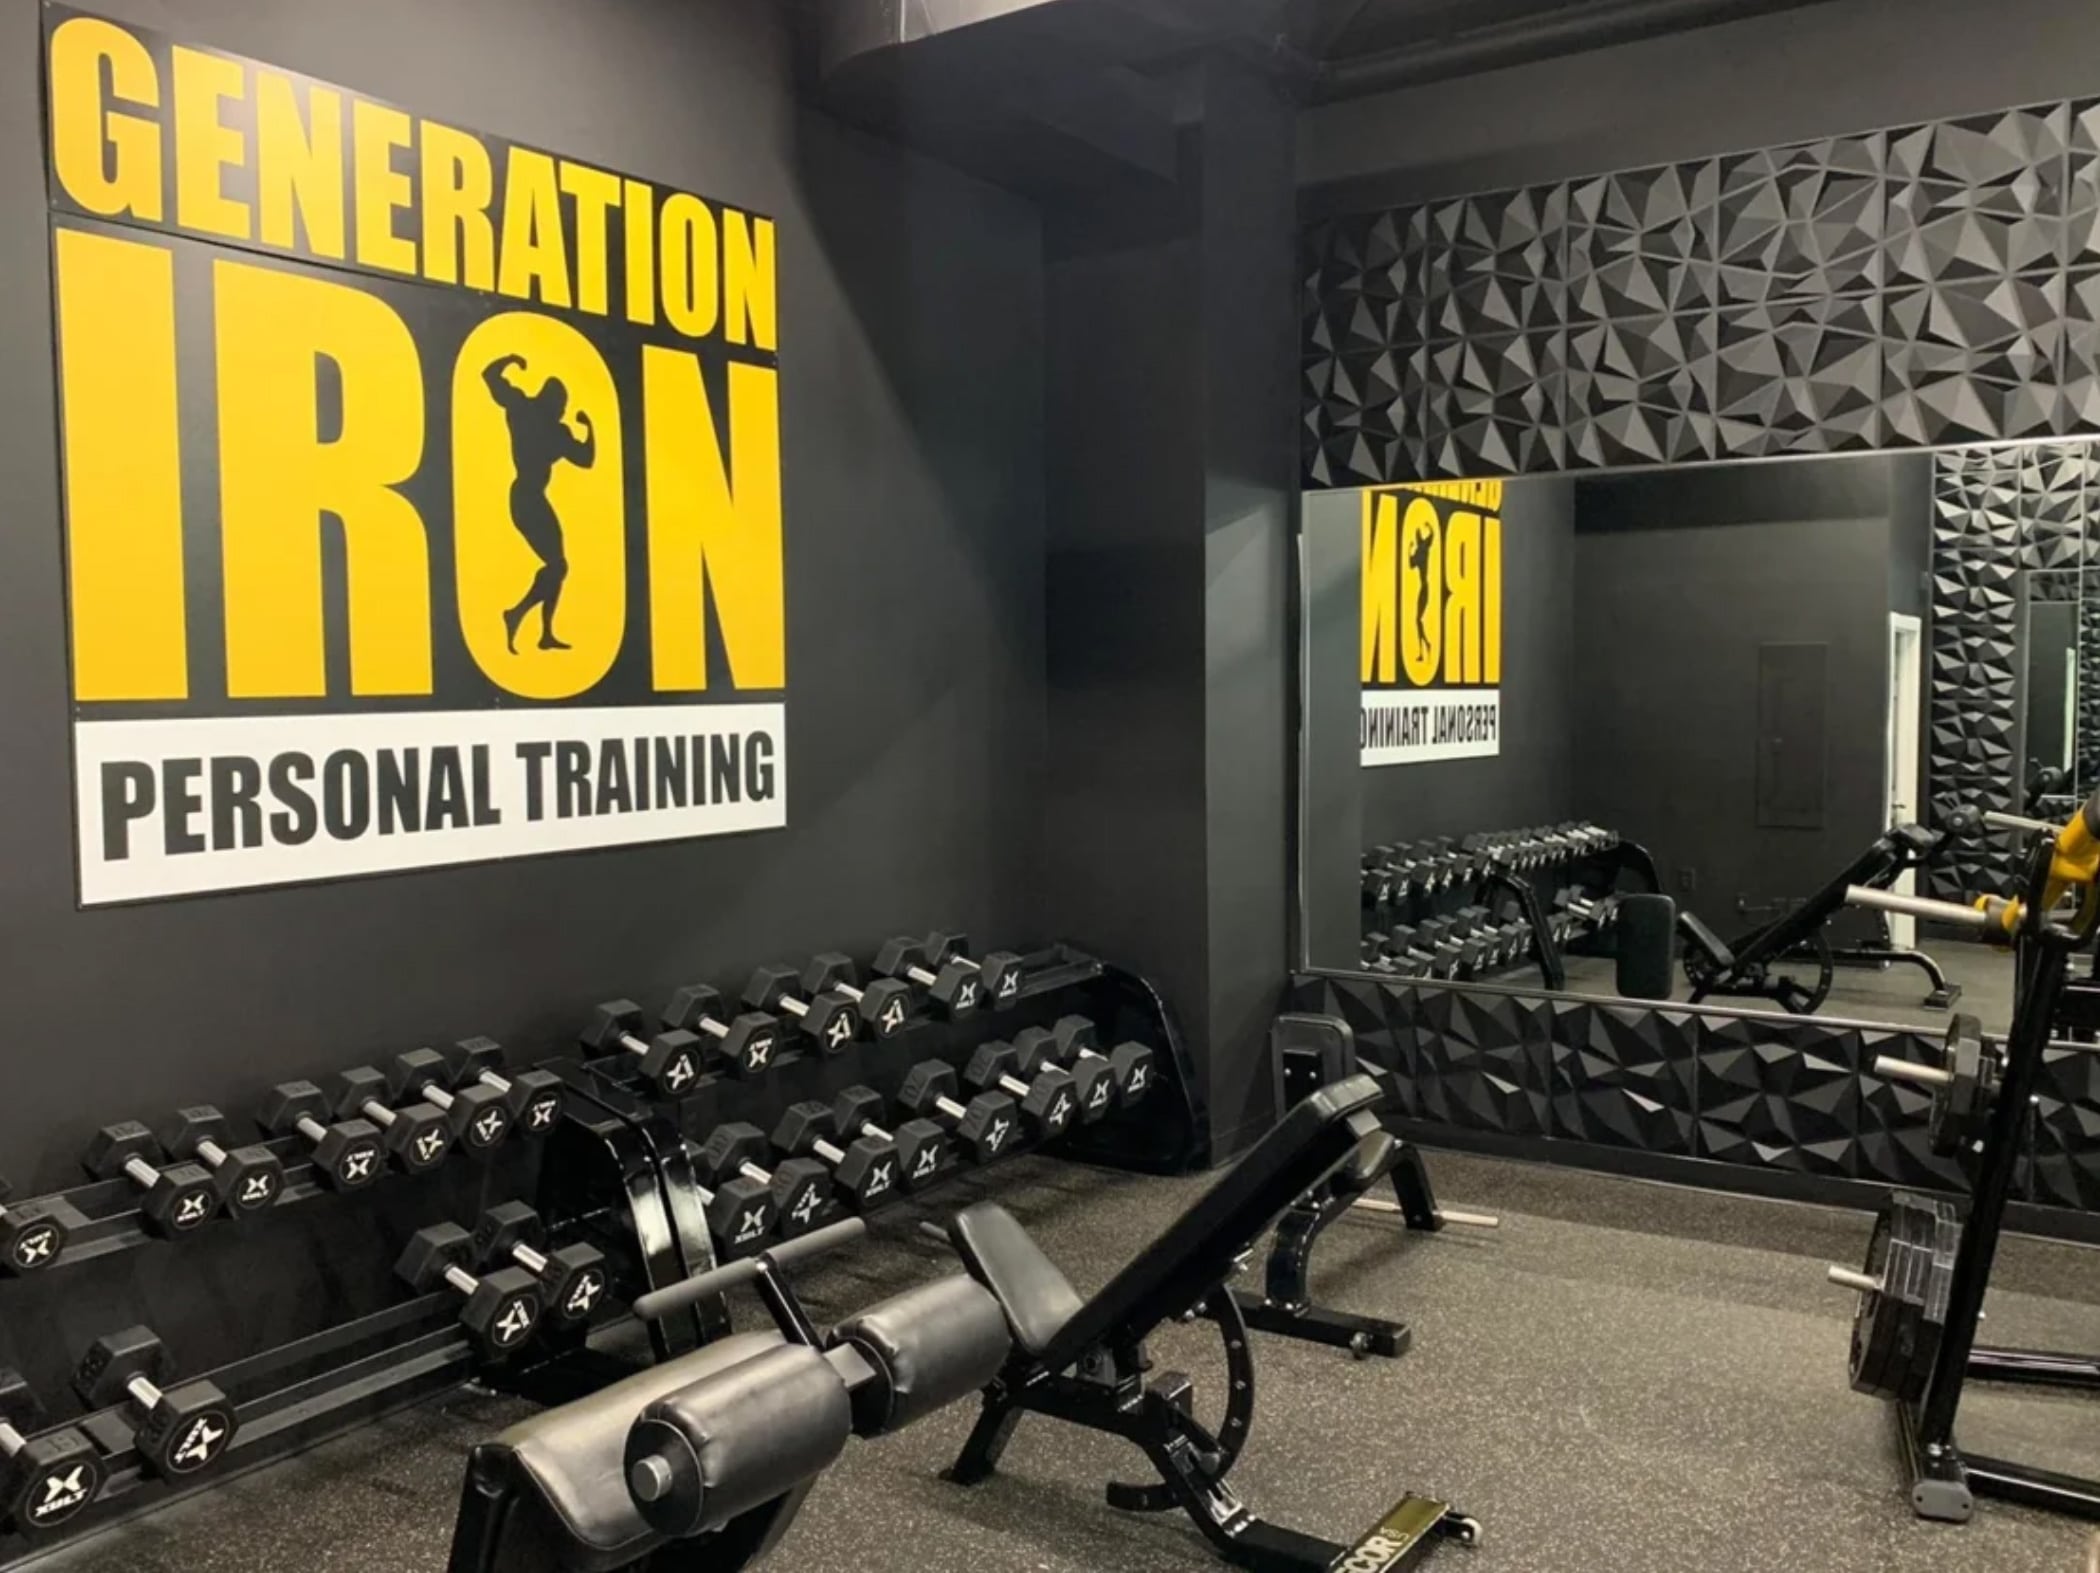 Generation Iron Personal Training Facility